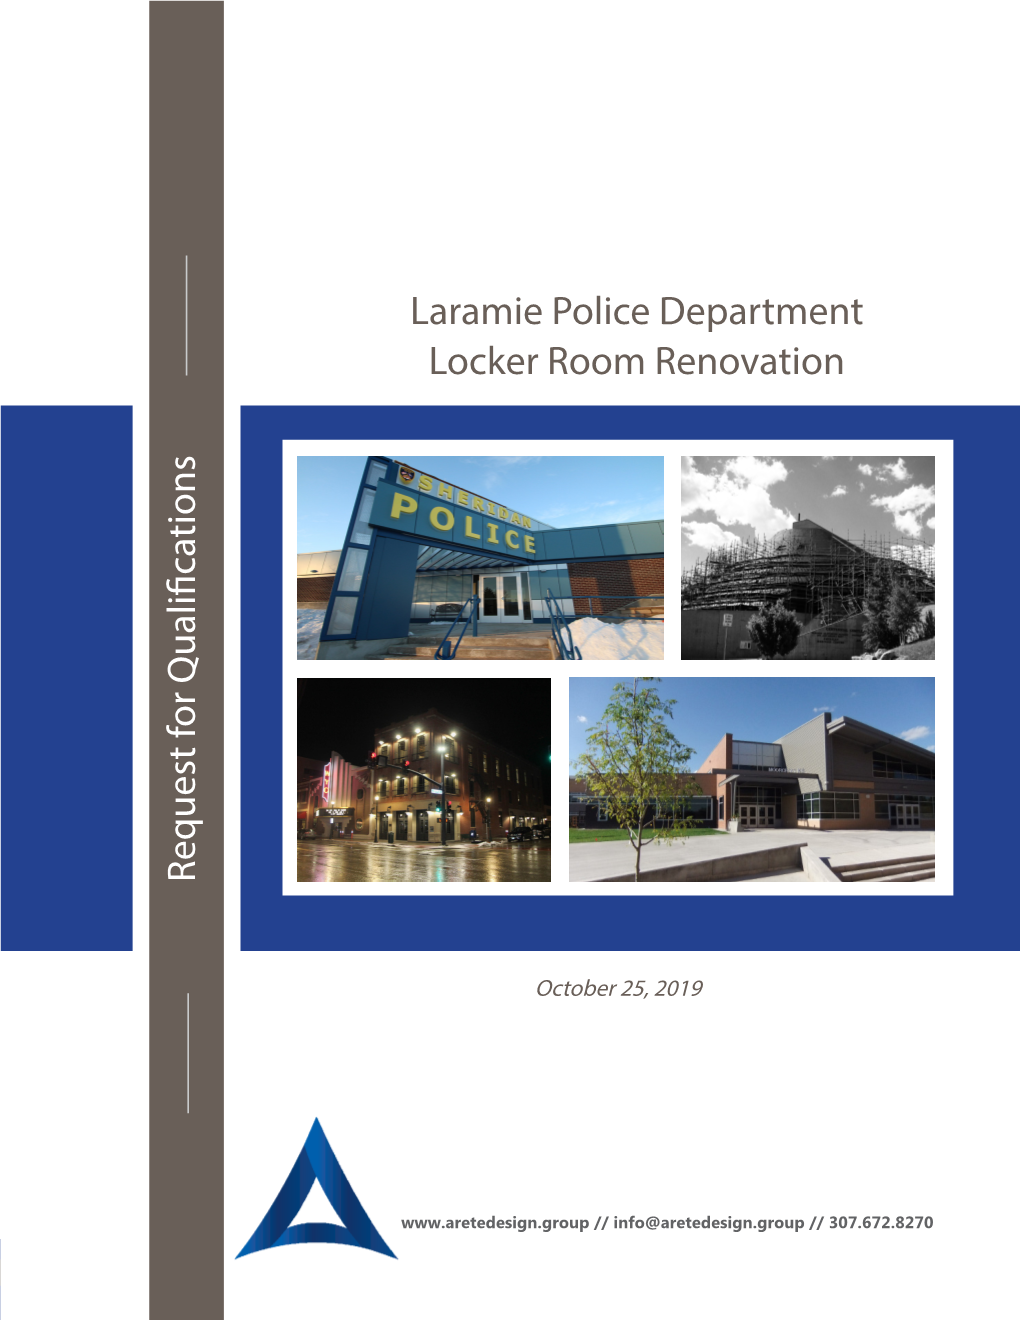 Laramie Police Department Locker Room Renovation Request for Q